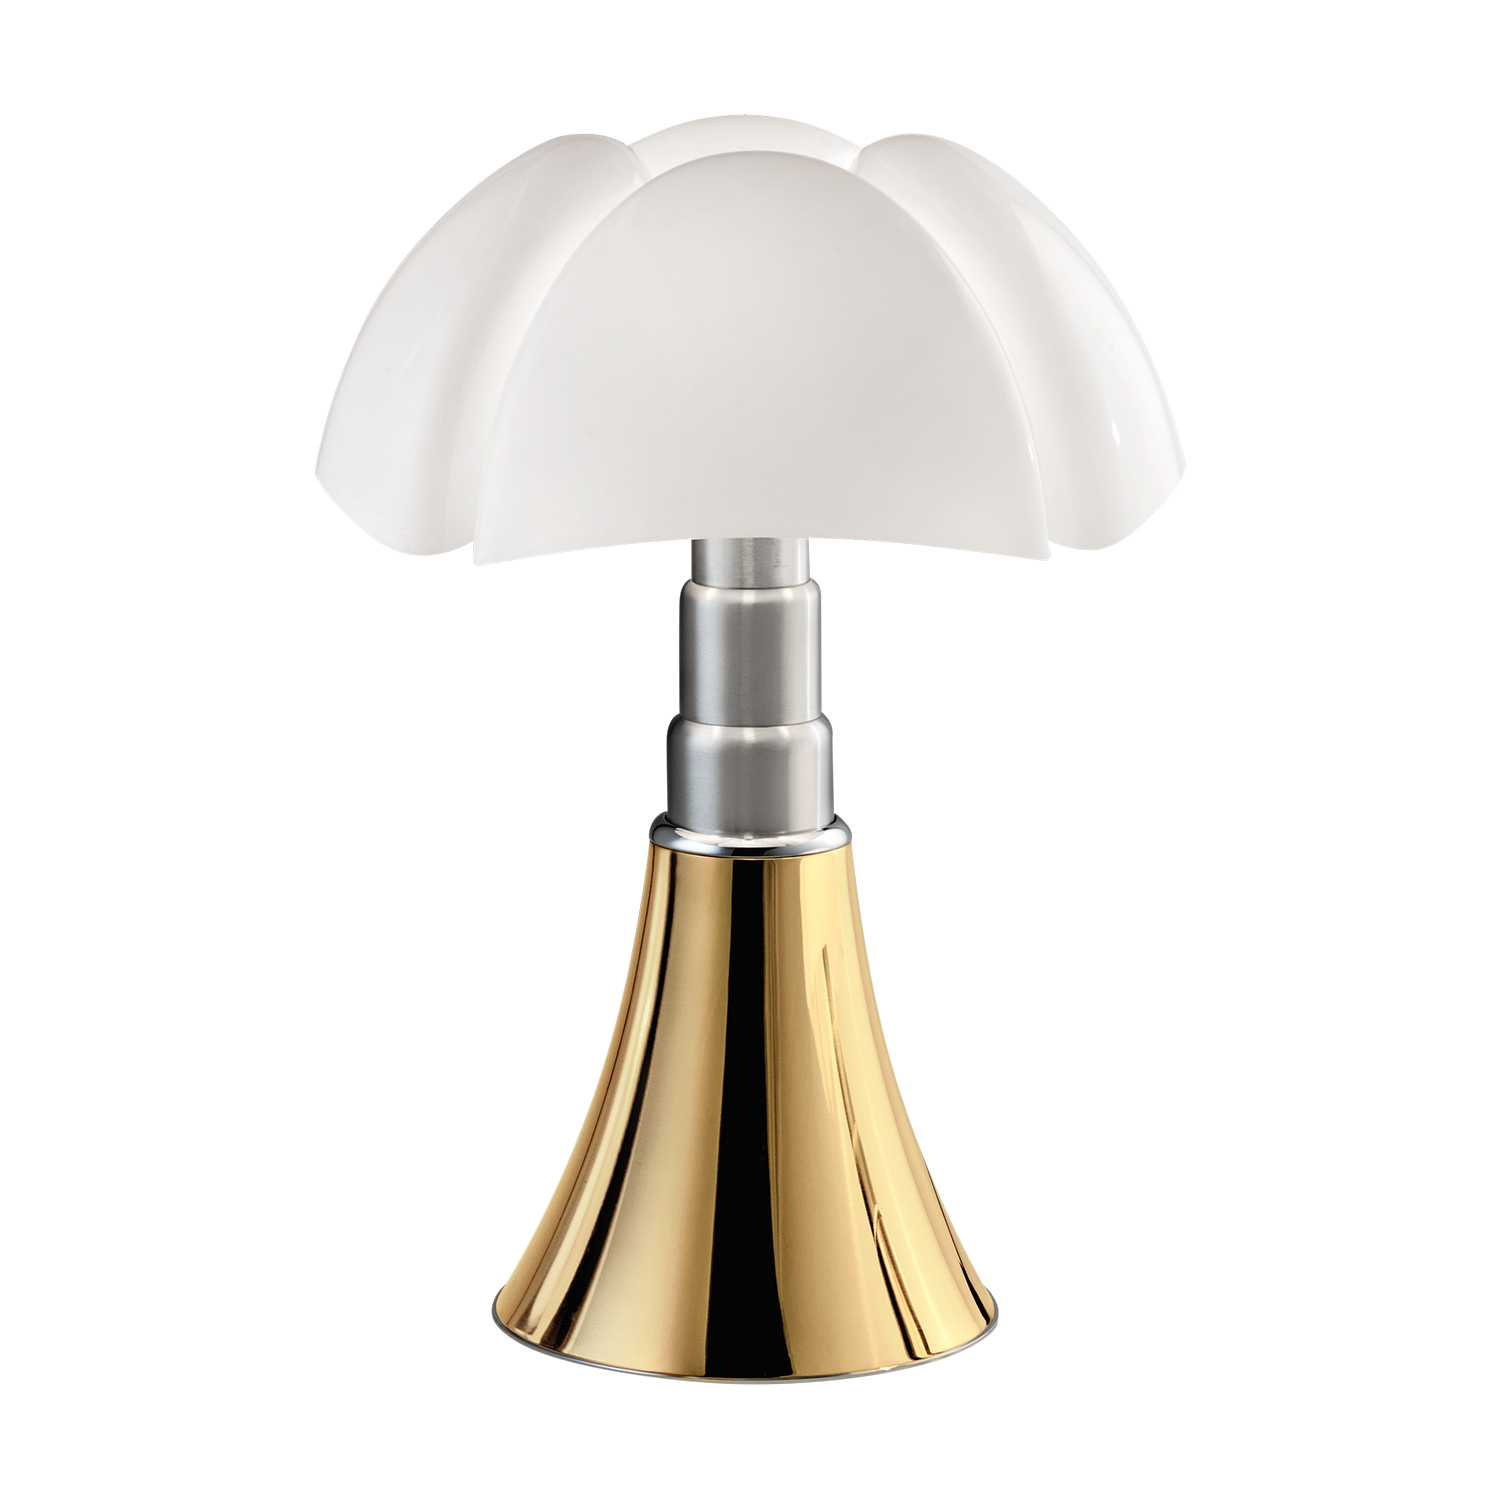 Pipistrello Lamp Dimmable, Martinelli Luce @ RoyalDesign